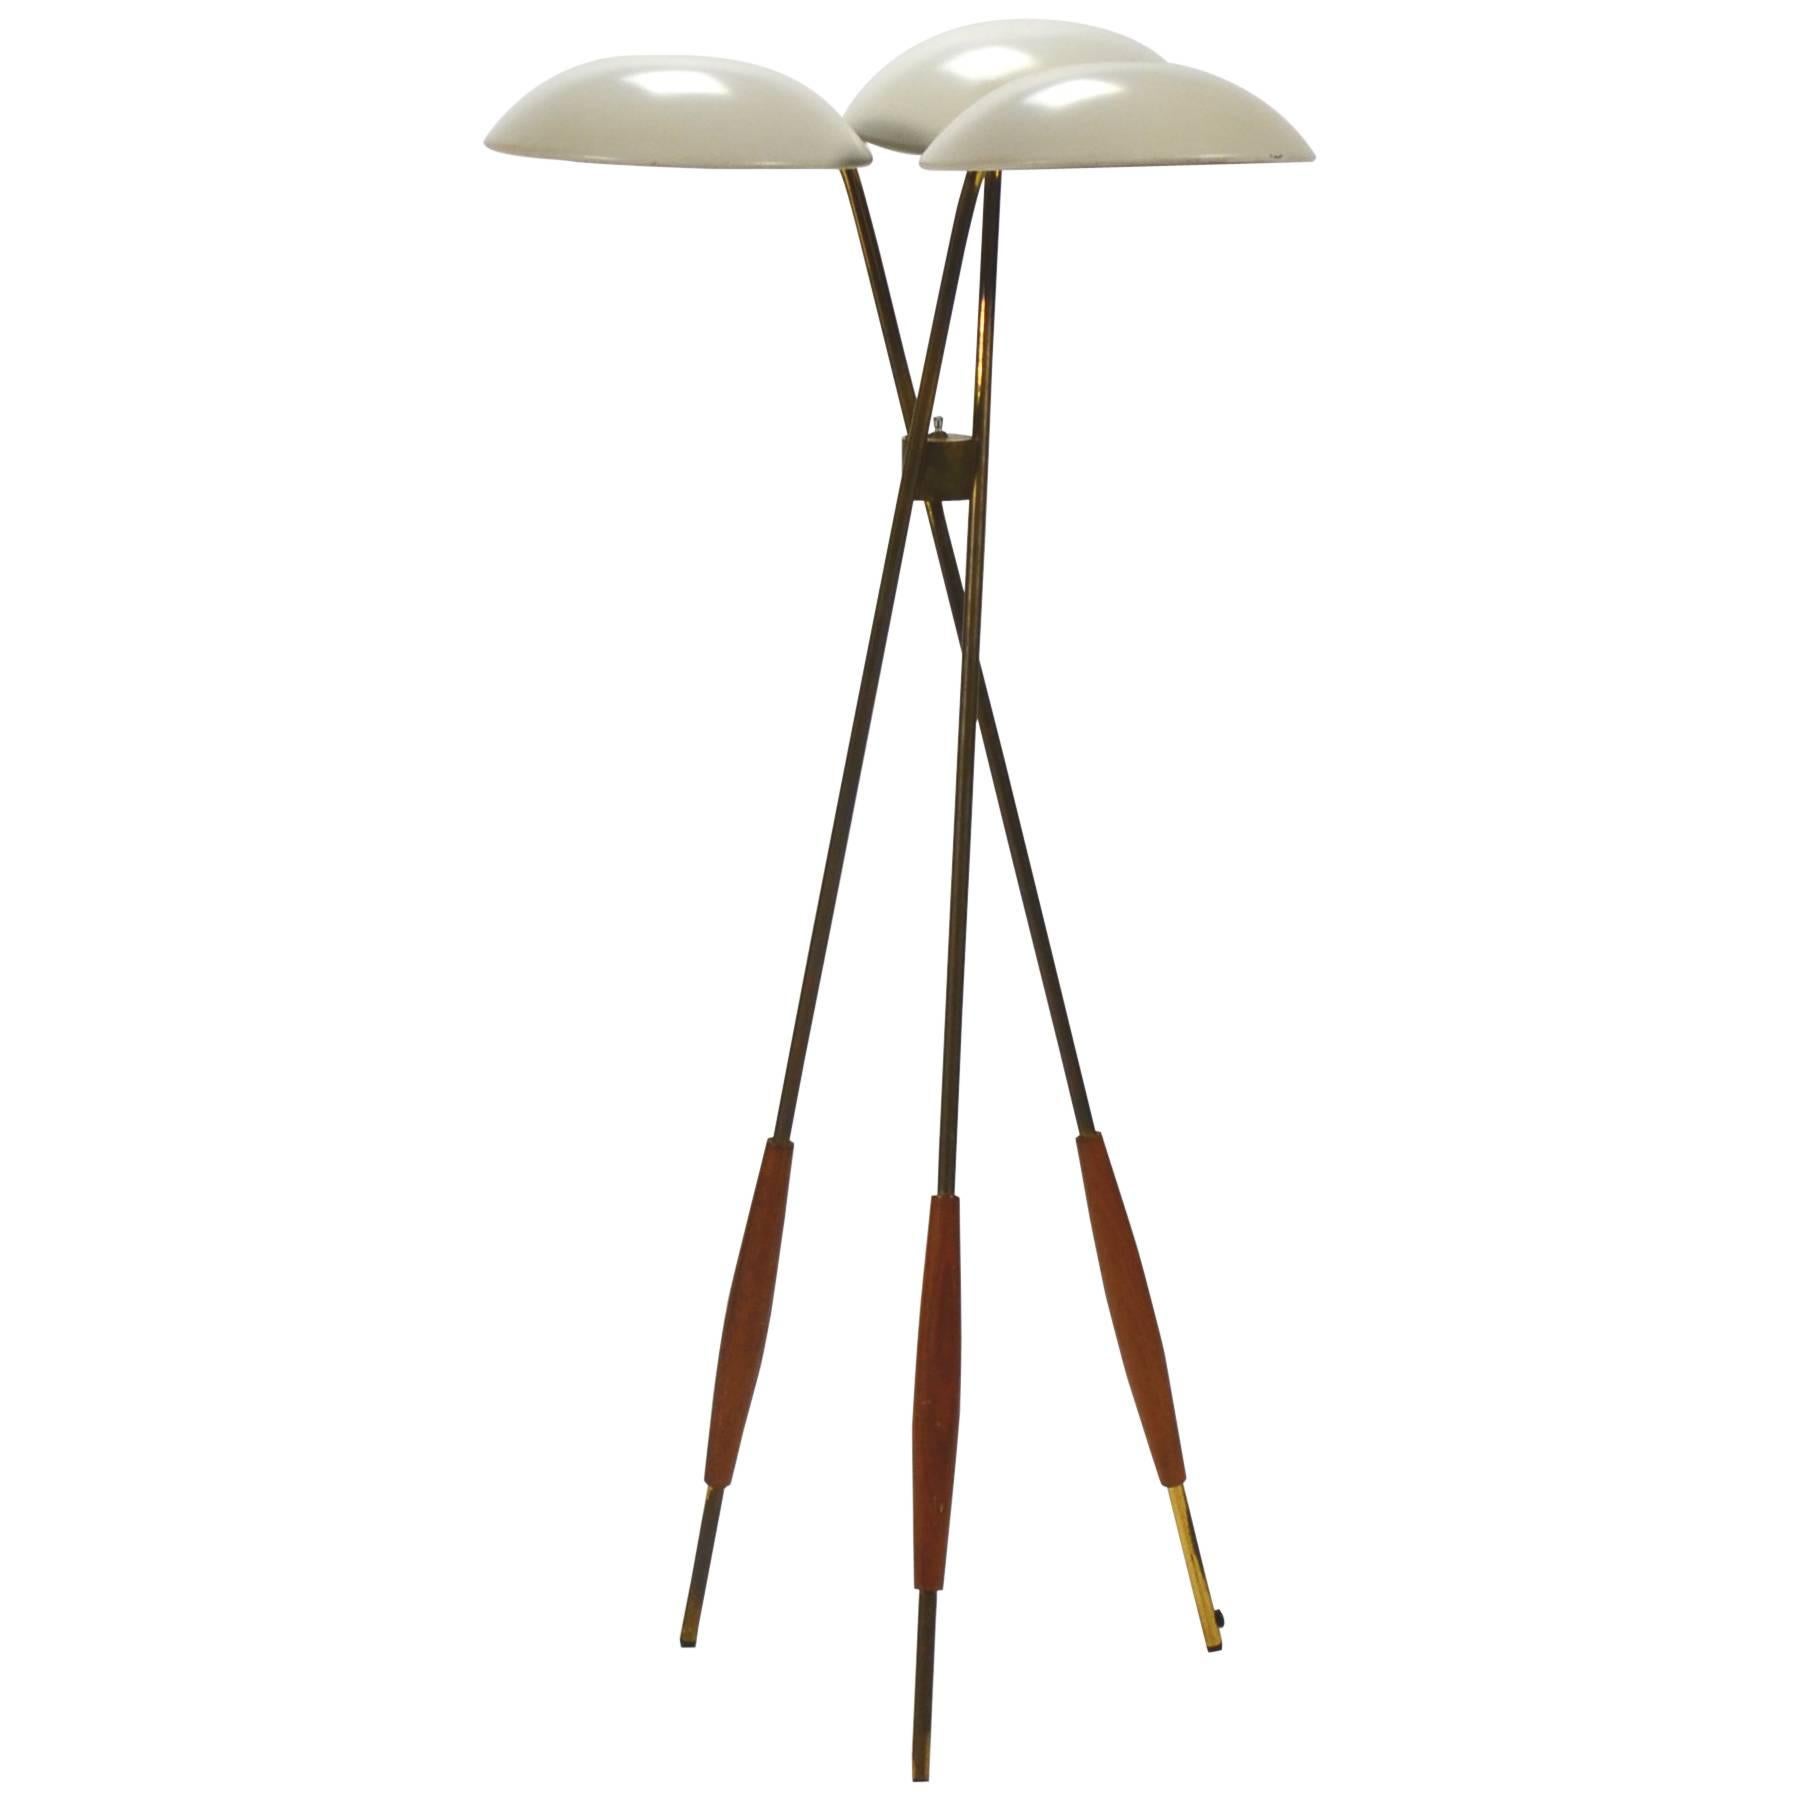 Gerald Thurston Tripod Floor Lamp by Lightolier